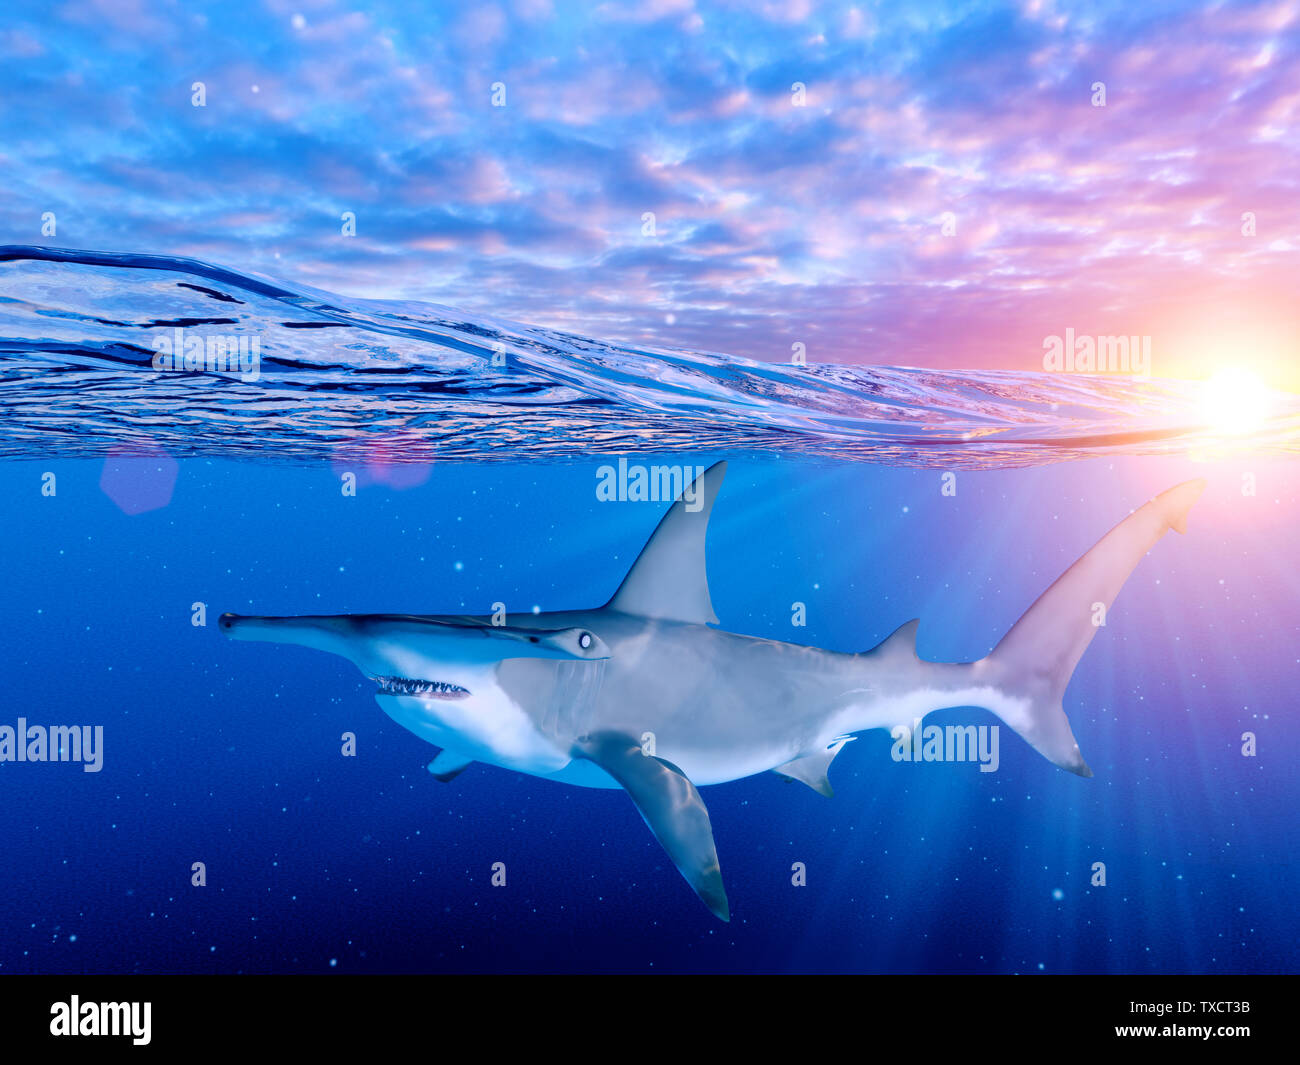 3d rendered illustration of a hammerhead shark Stock Photo